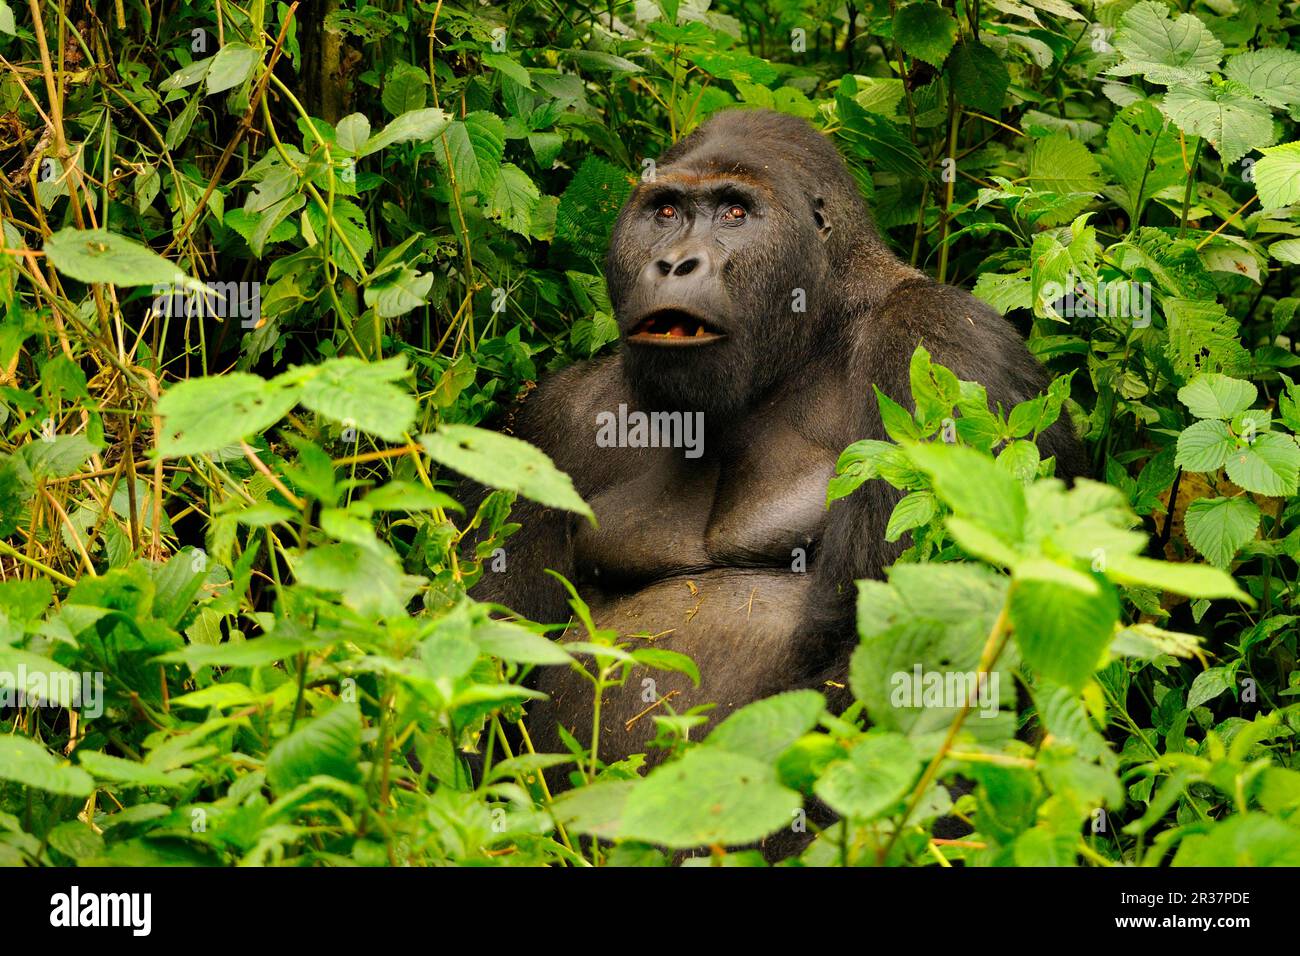 Gorilla di pianura orientale (Gorilla beringei graueri), gorilla di pianura orientale, gorilla di pianura orientale, scimmie, gorilla, scimmie, primati, mammiferi Foto Stock